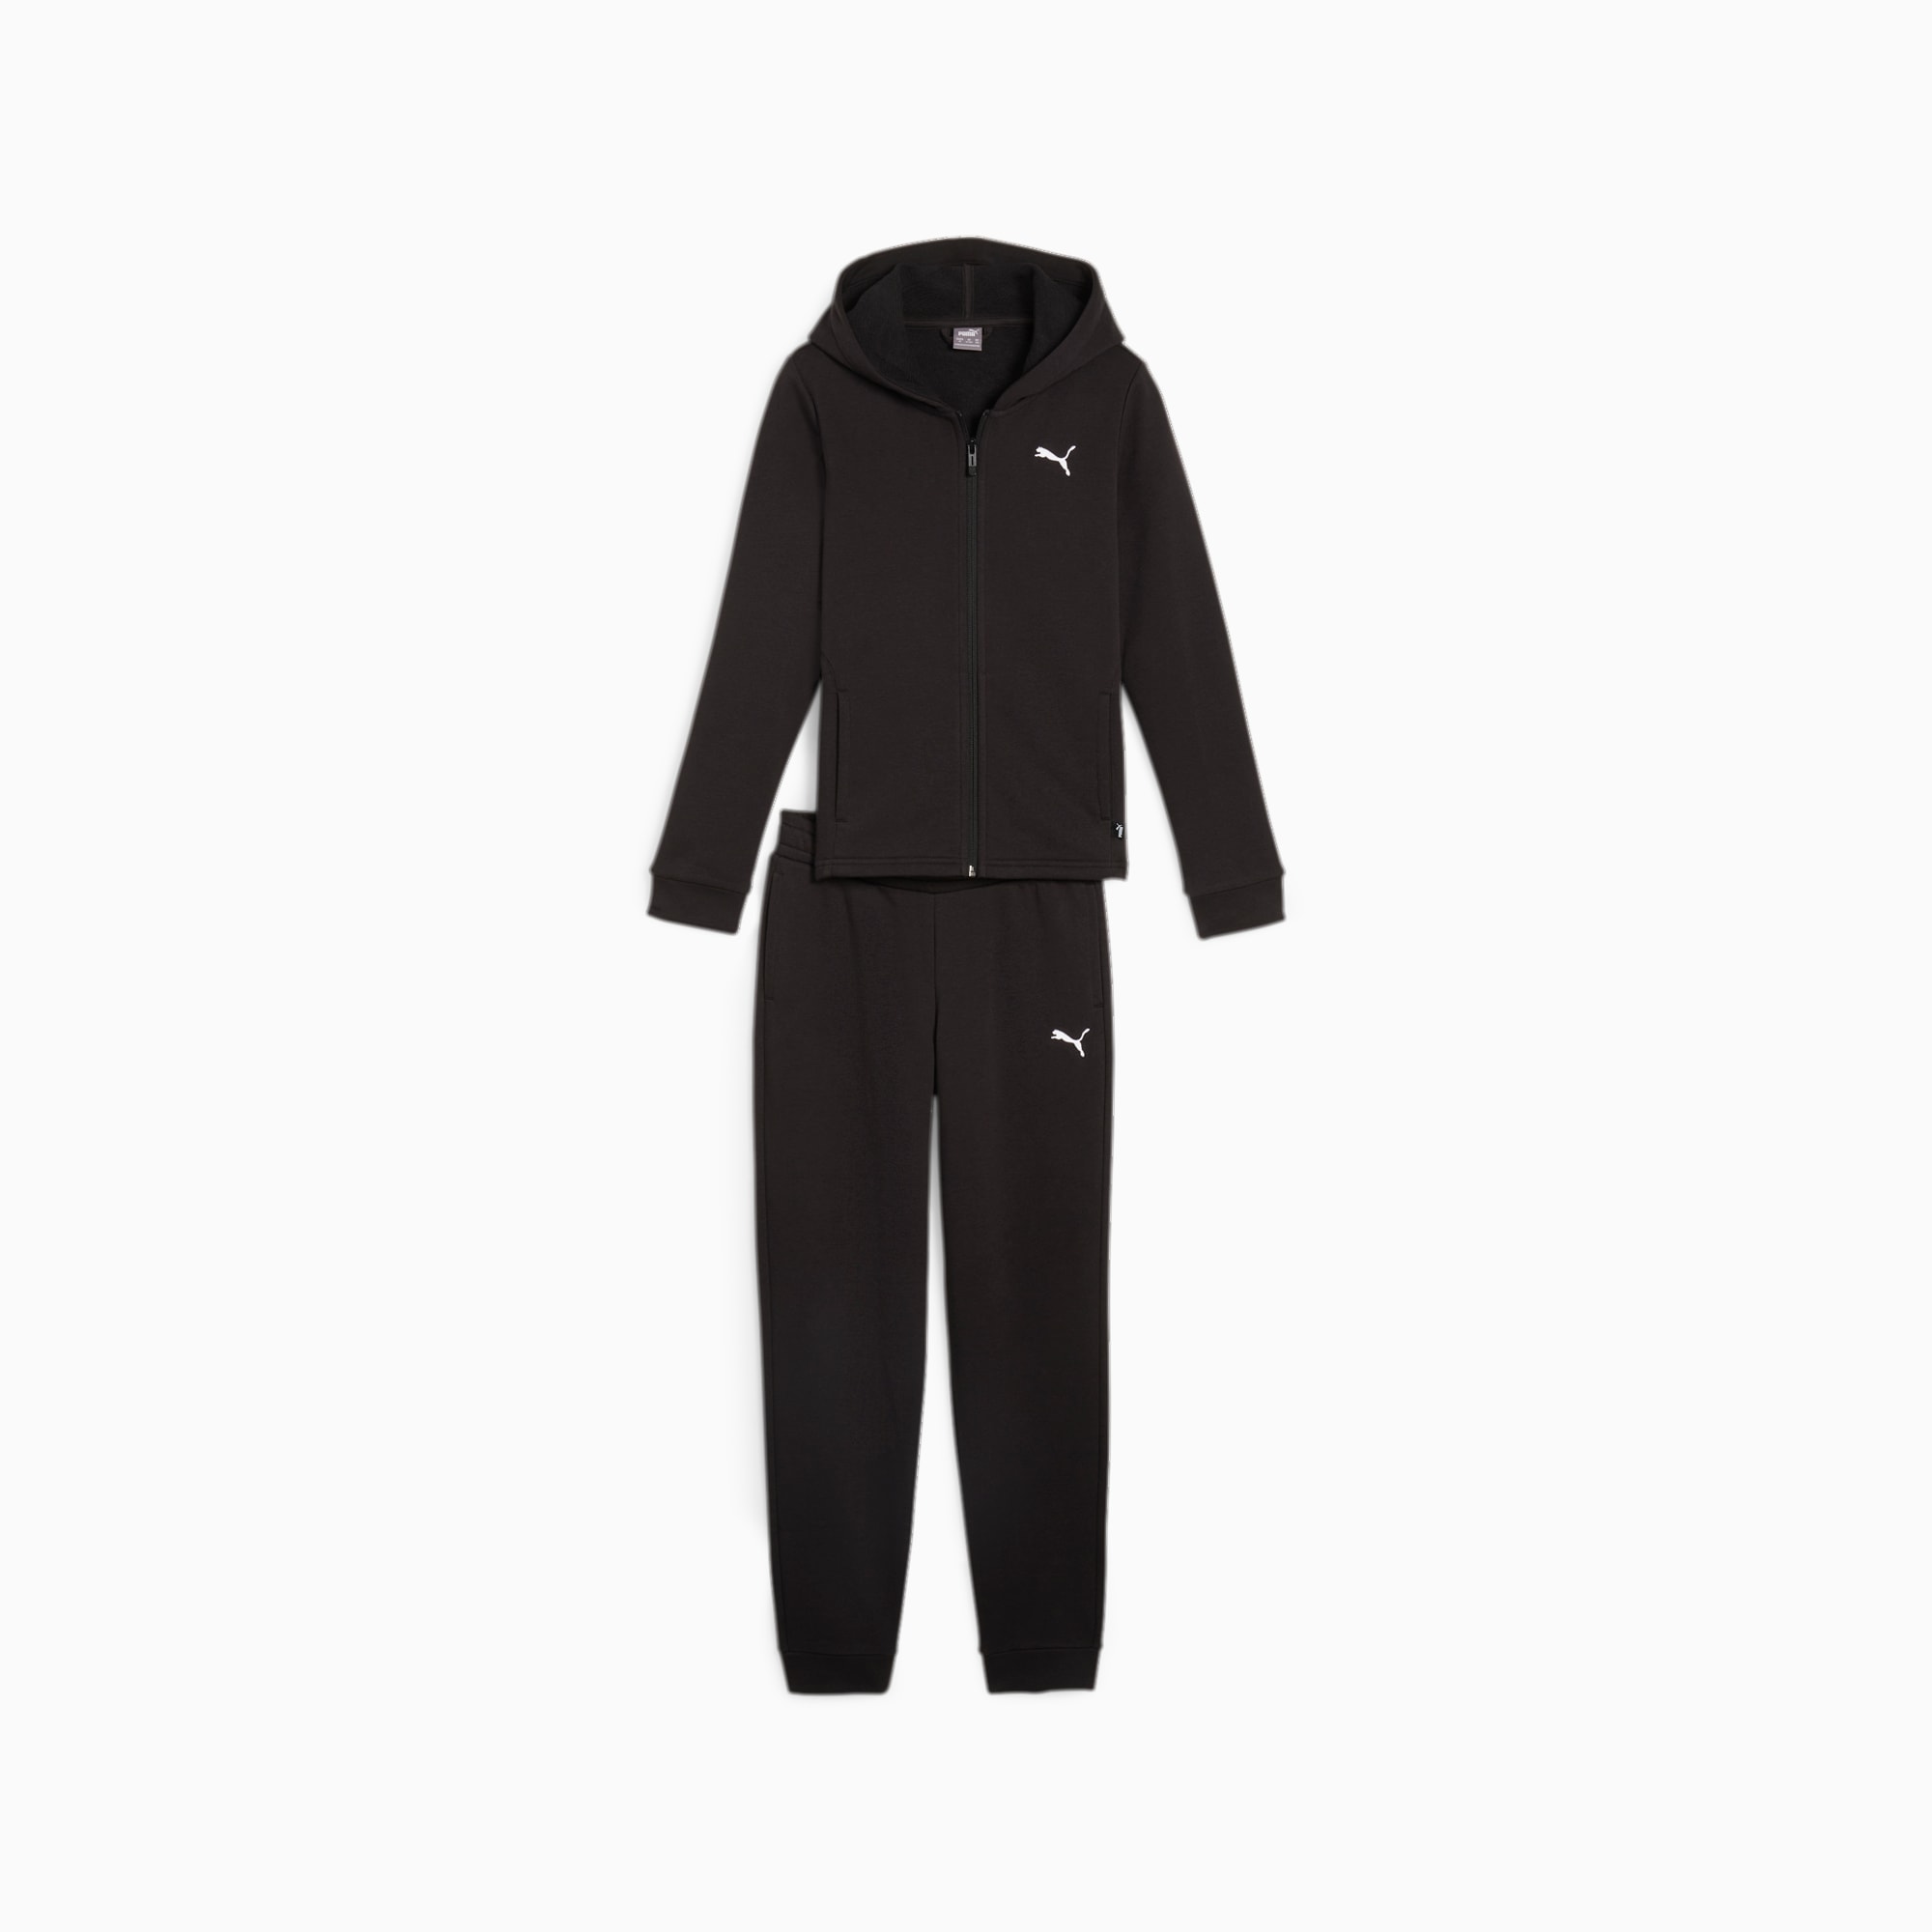 PUMA Hooded Sweatsuit Youth, Black, Size 104, Clothing